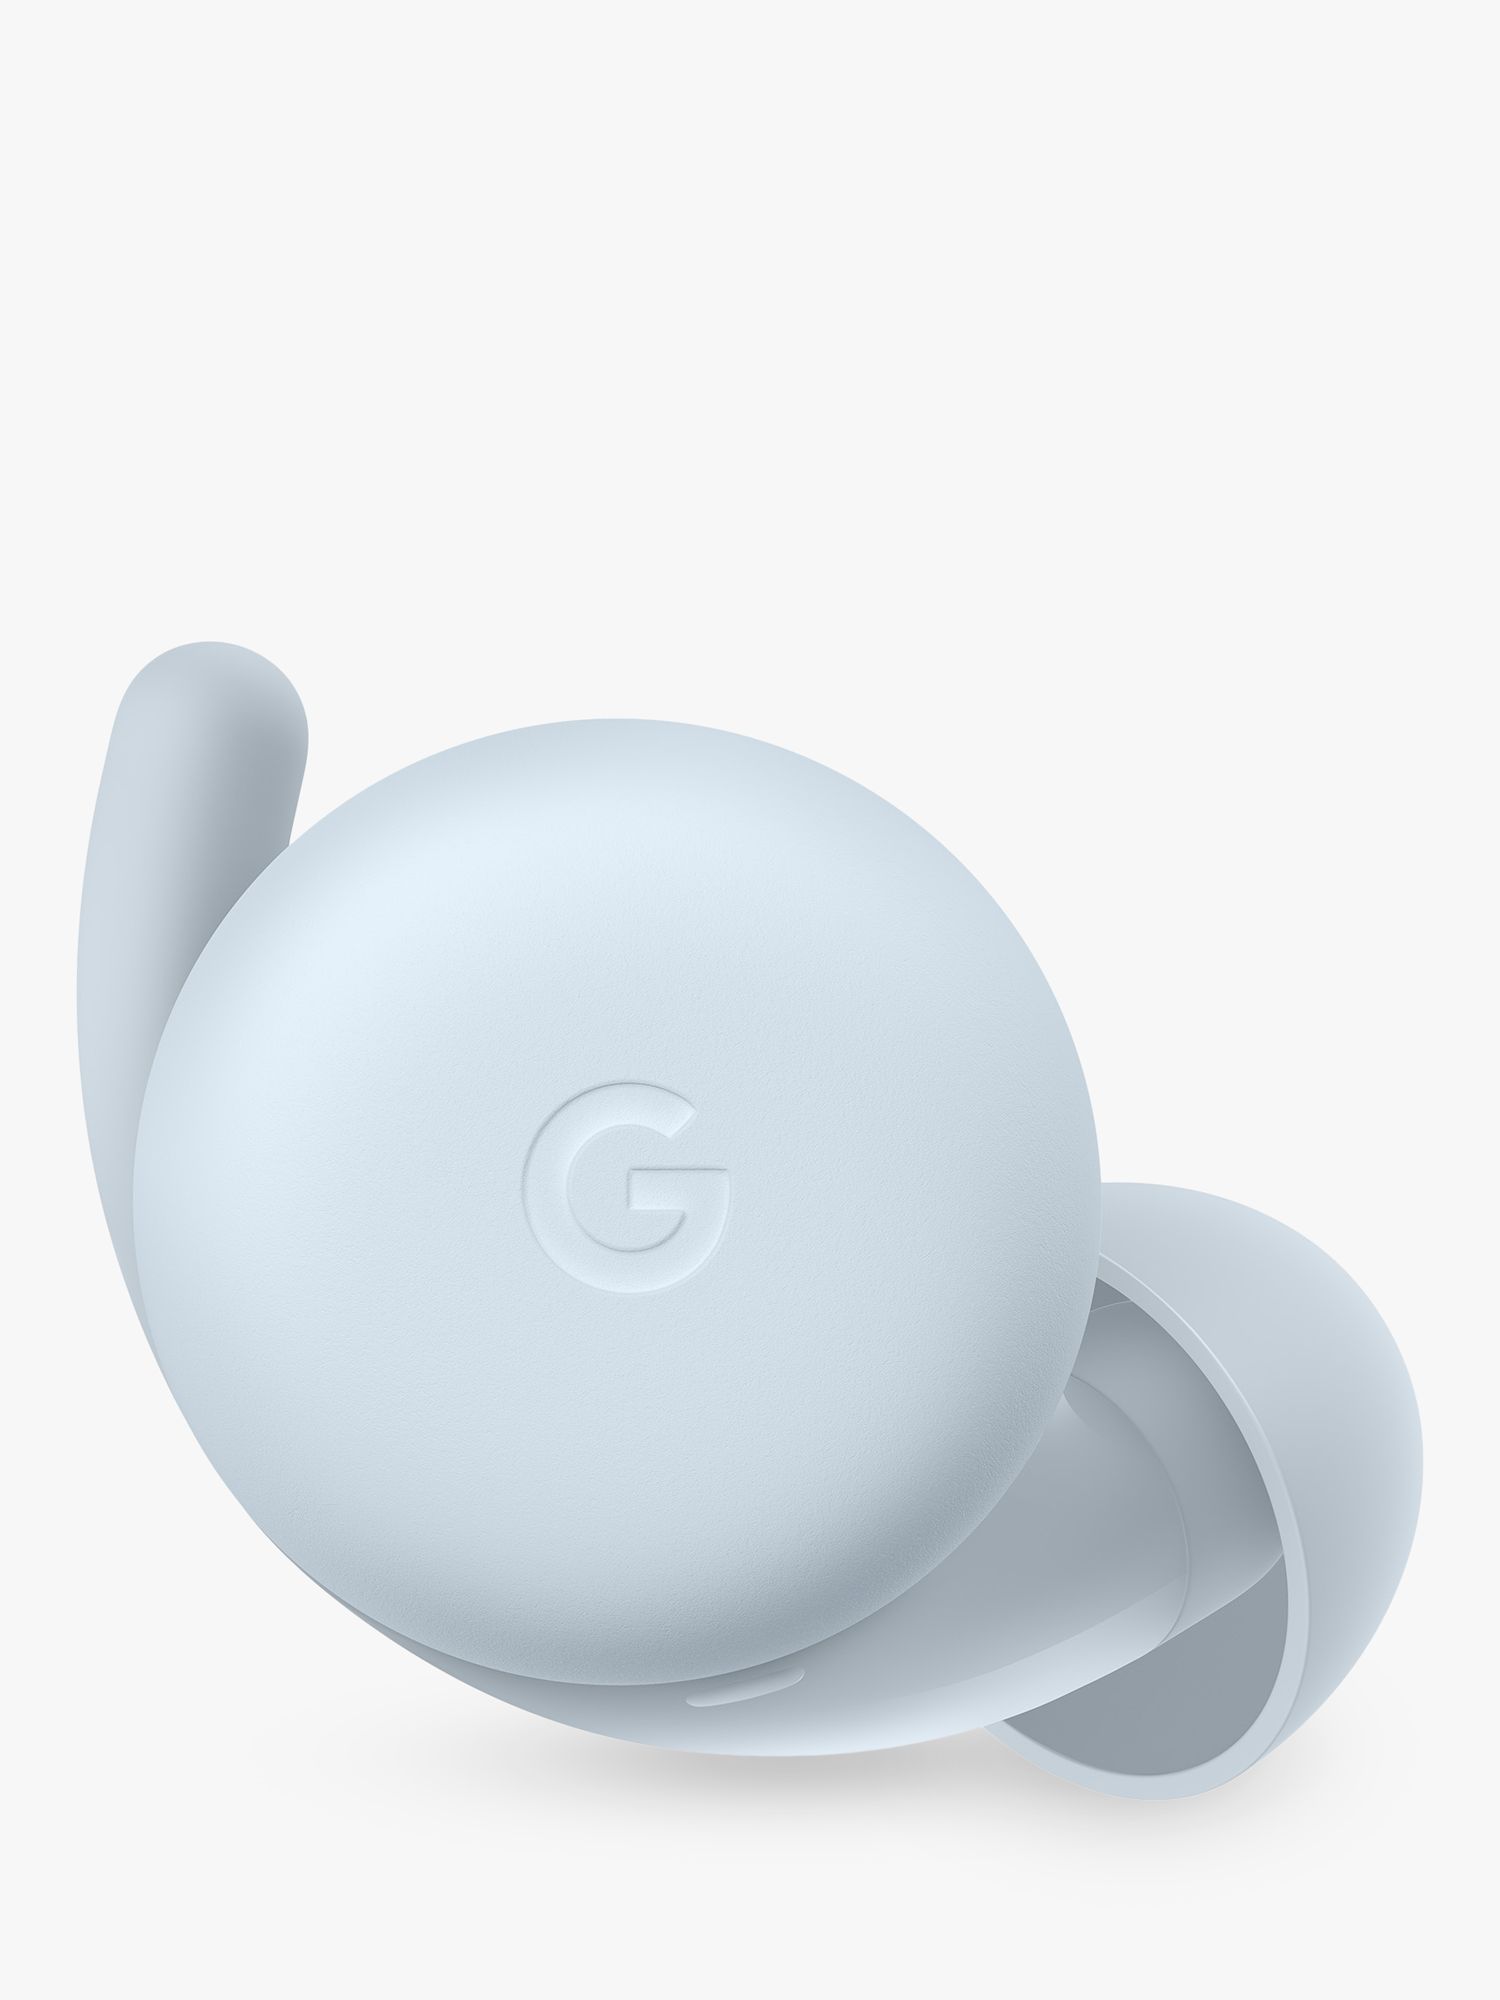 Google Pixel Buds Bluetooth In-Ear Headphones - White